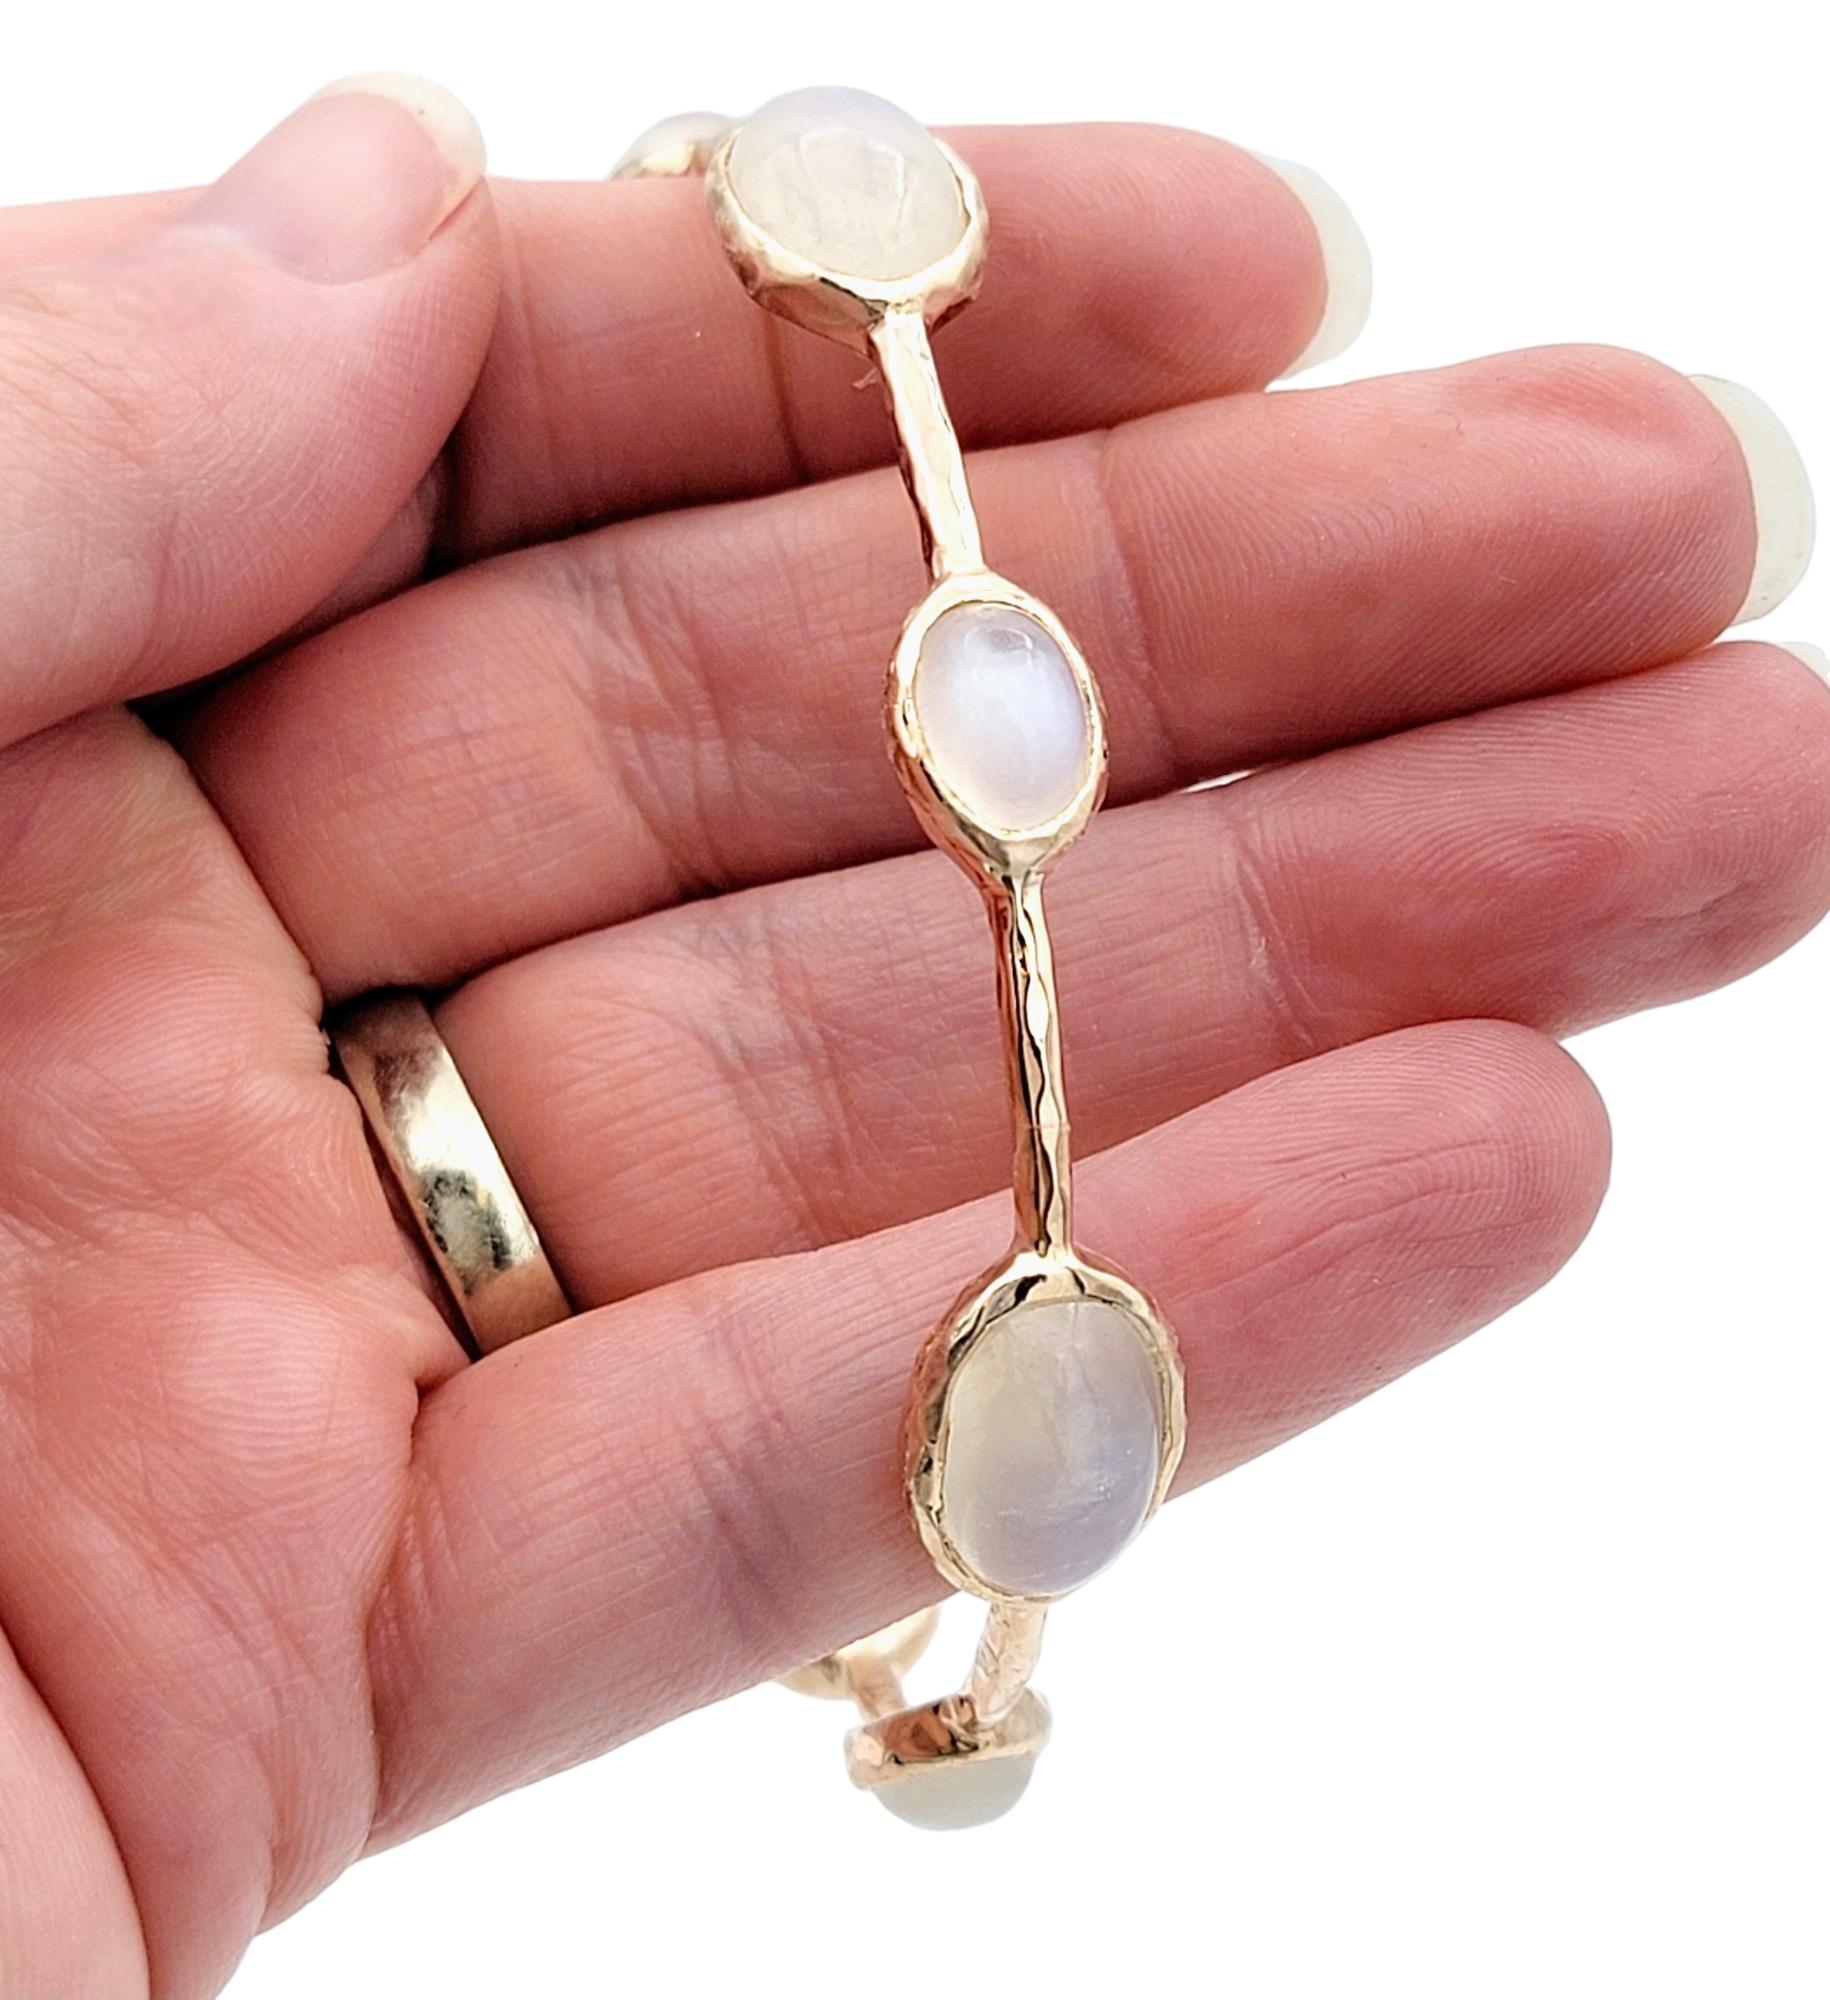 Ippolita Oval Cabochon Moonstone Bangle Bracelet Set in Rose Gold Plated Silver For Sale 1